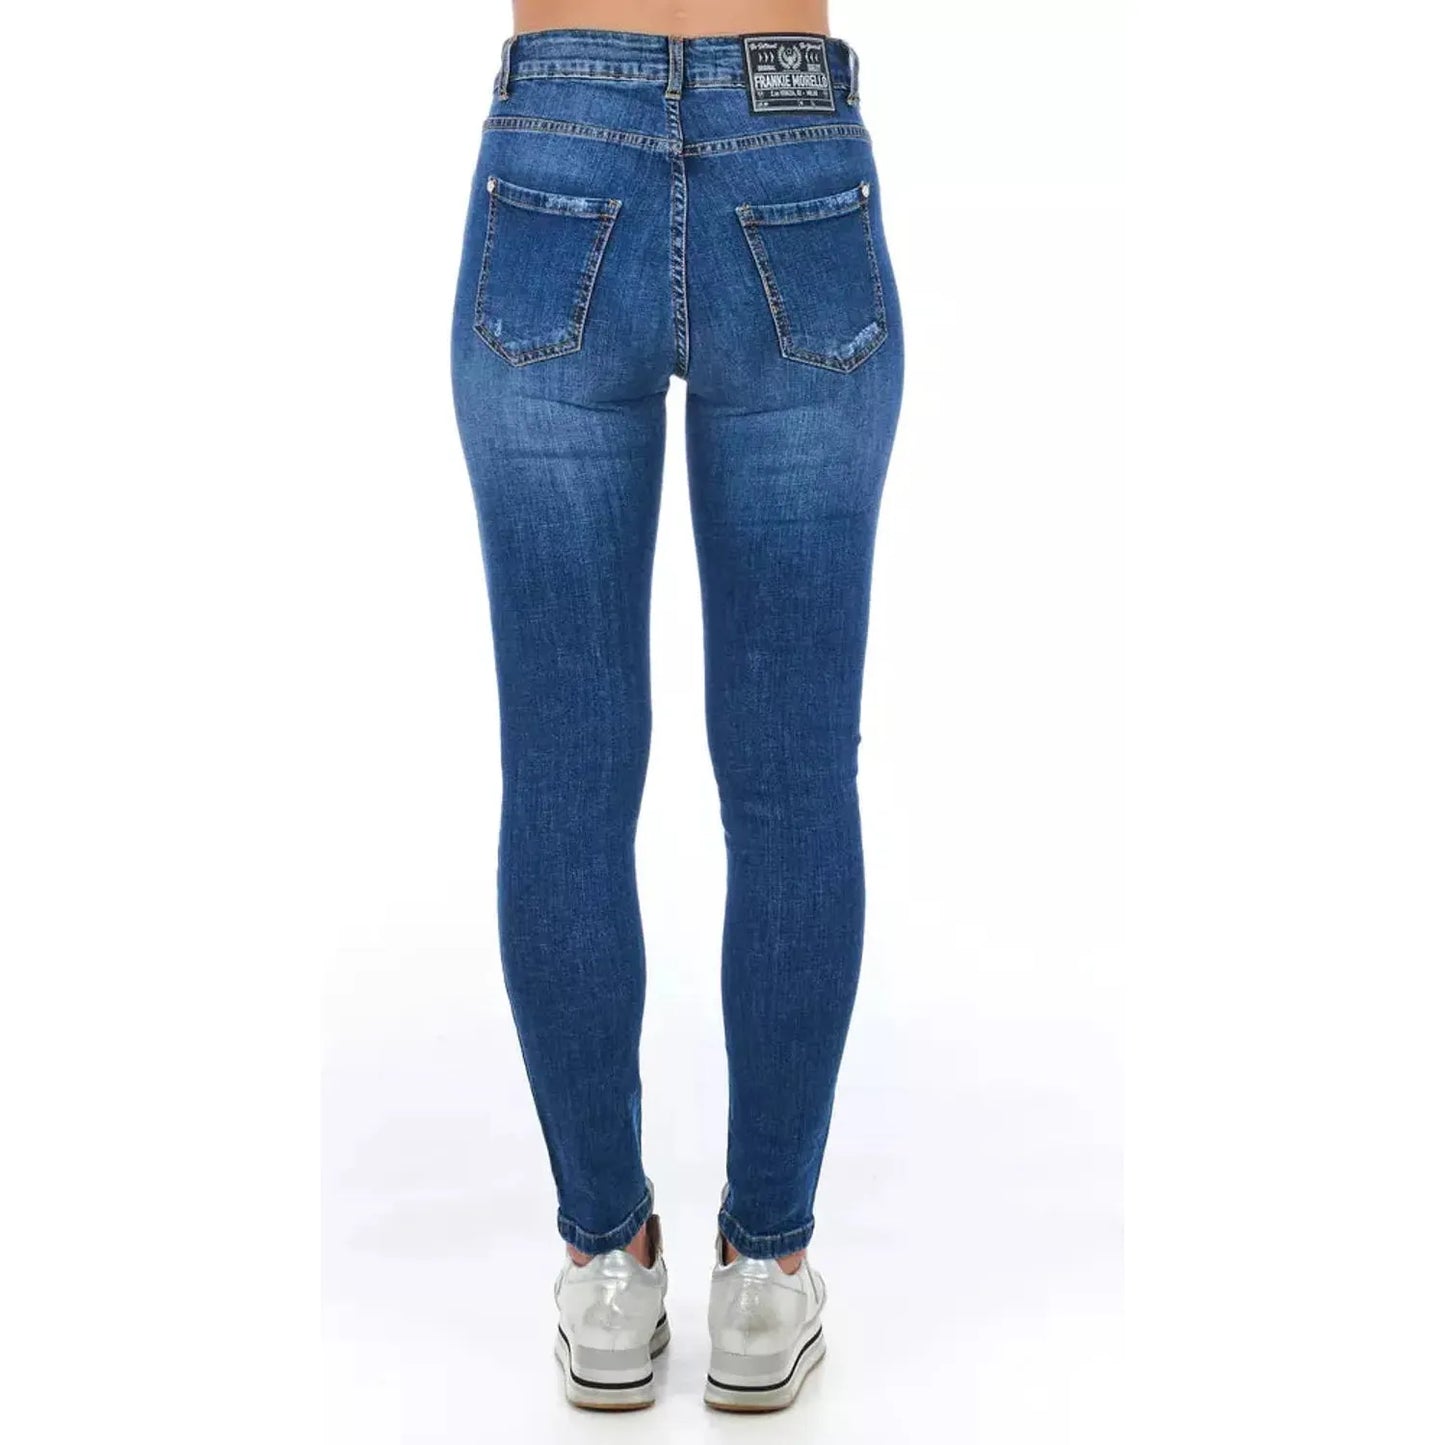 Frankie Morello Stylish Worn Wash Denim Jeans blue-jeans-pant-6 stock_product_image_21770_753461890-23-f0598f4f-670.webp